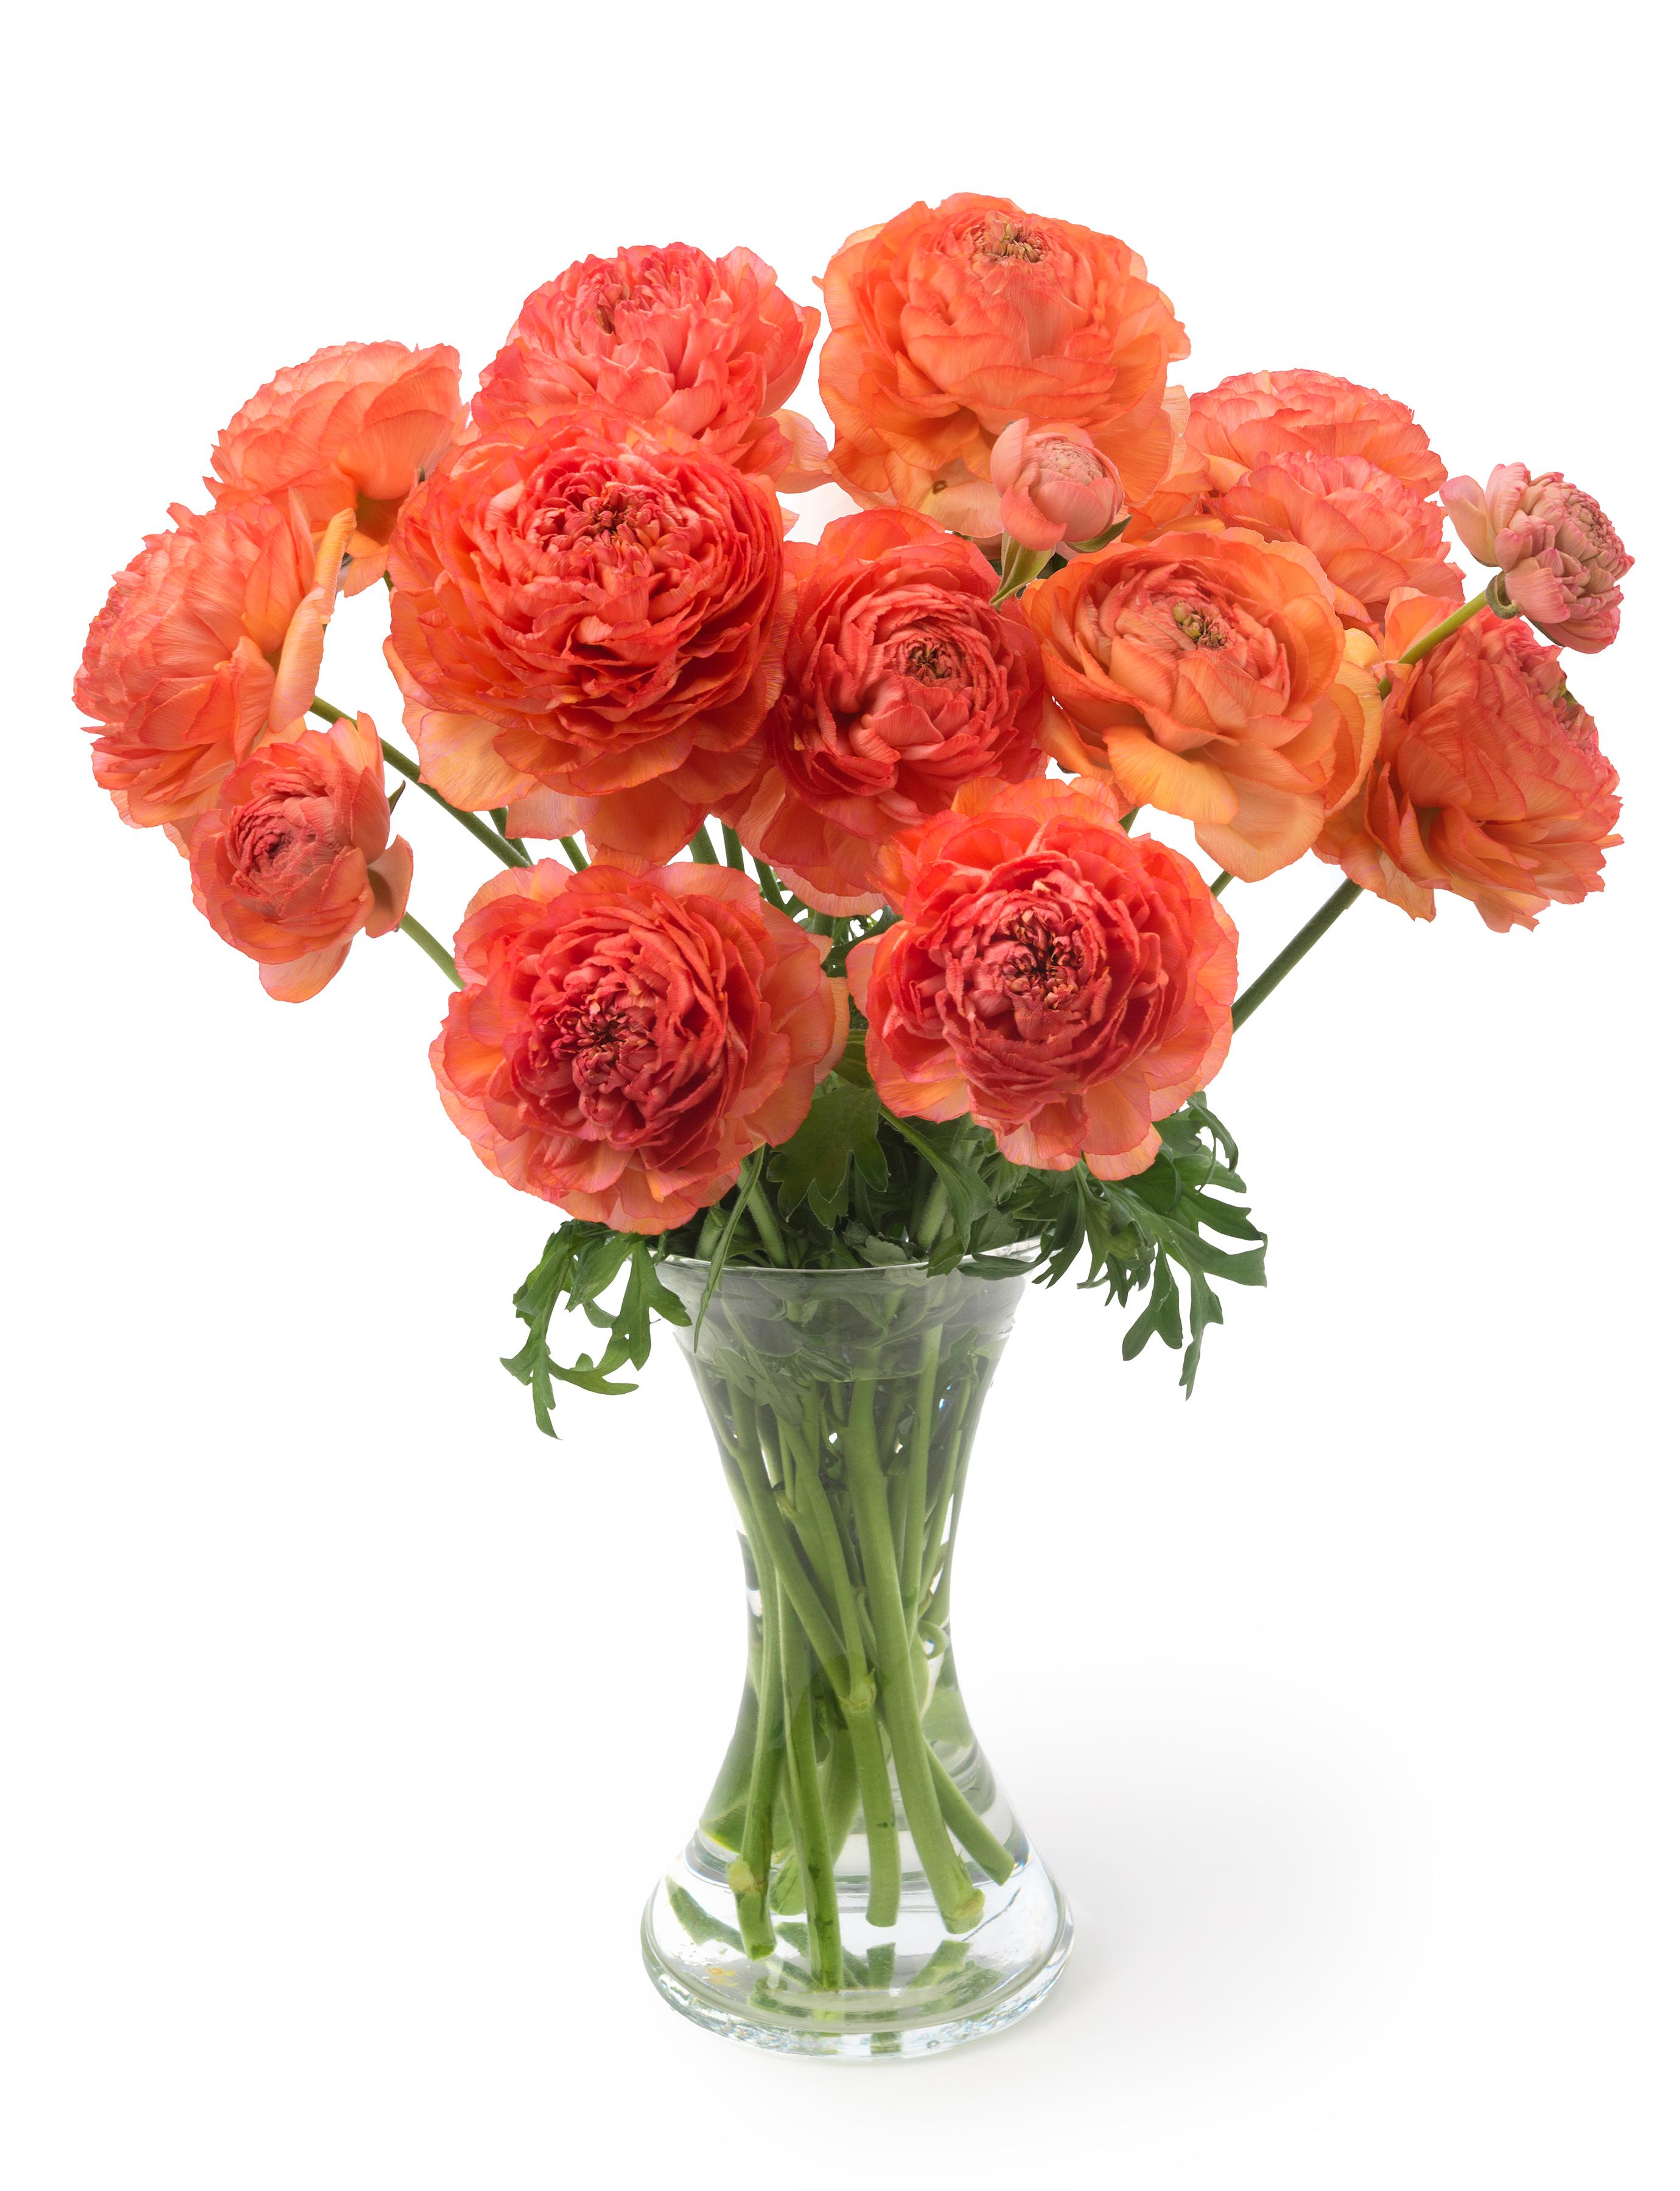 Ranunculus Romance Paradou from Leo Berbee Bulb Company